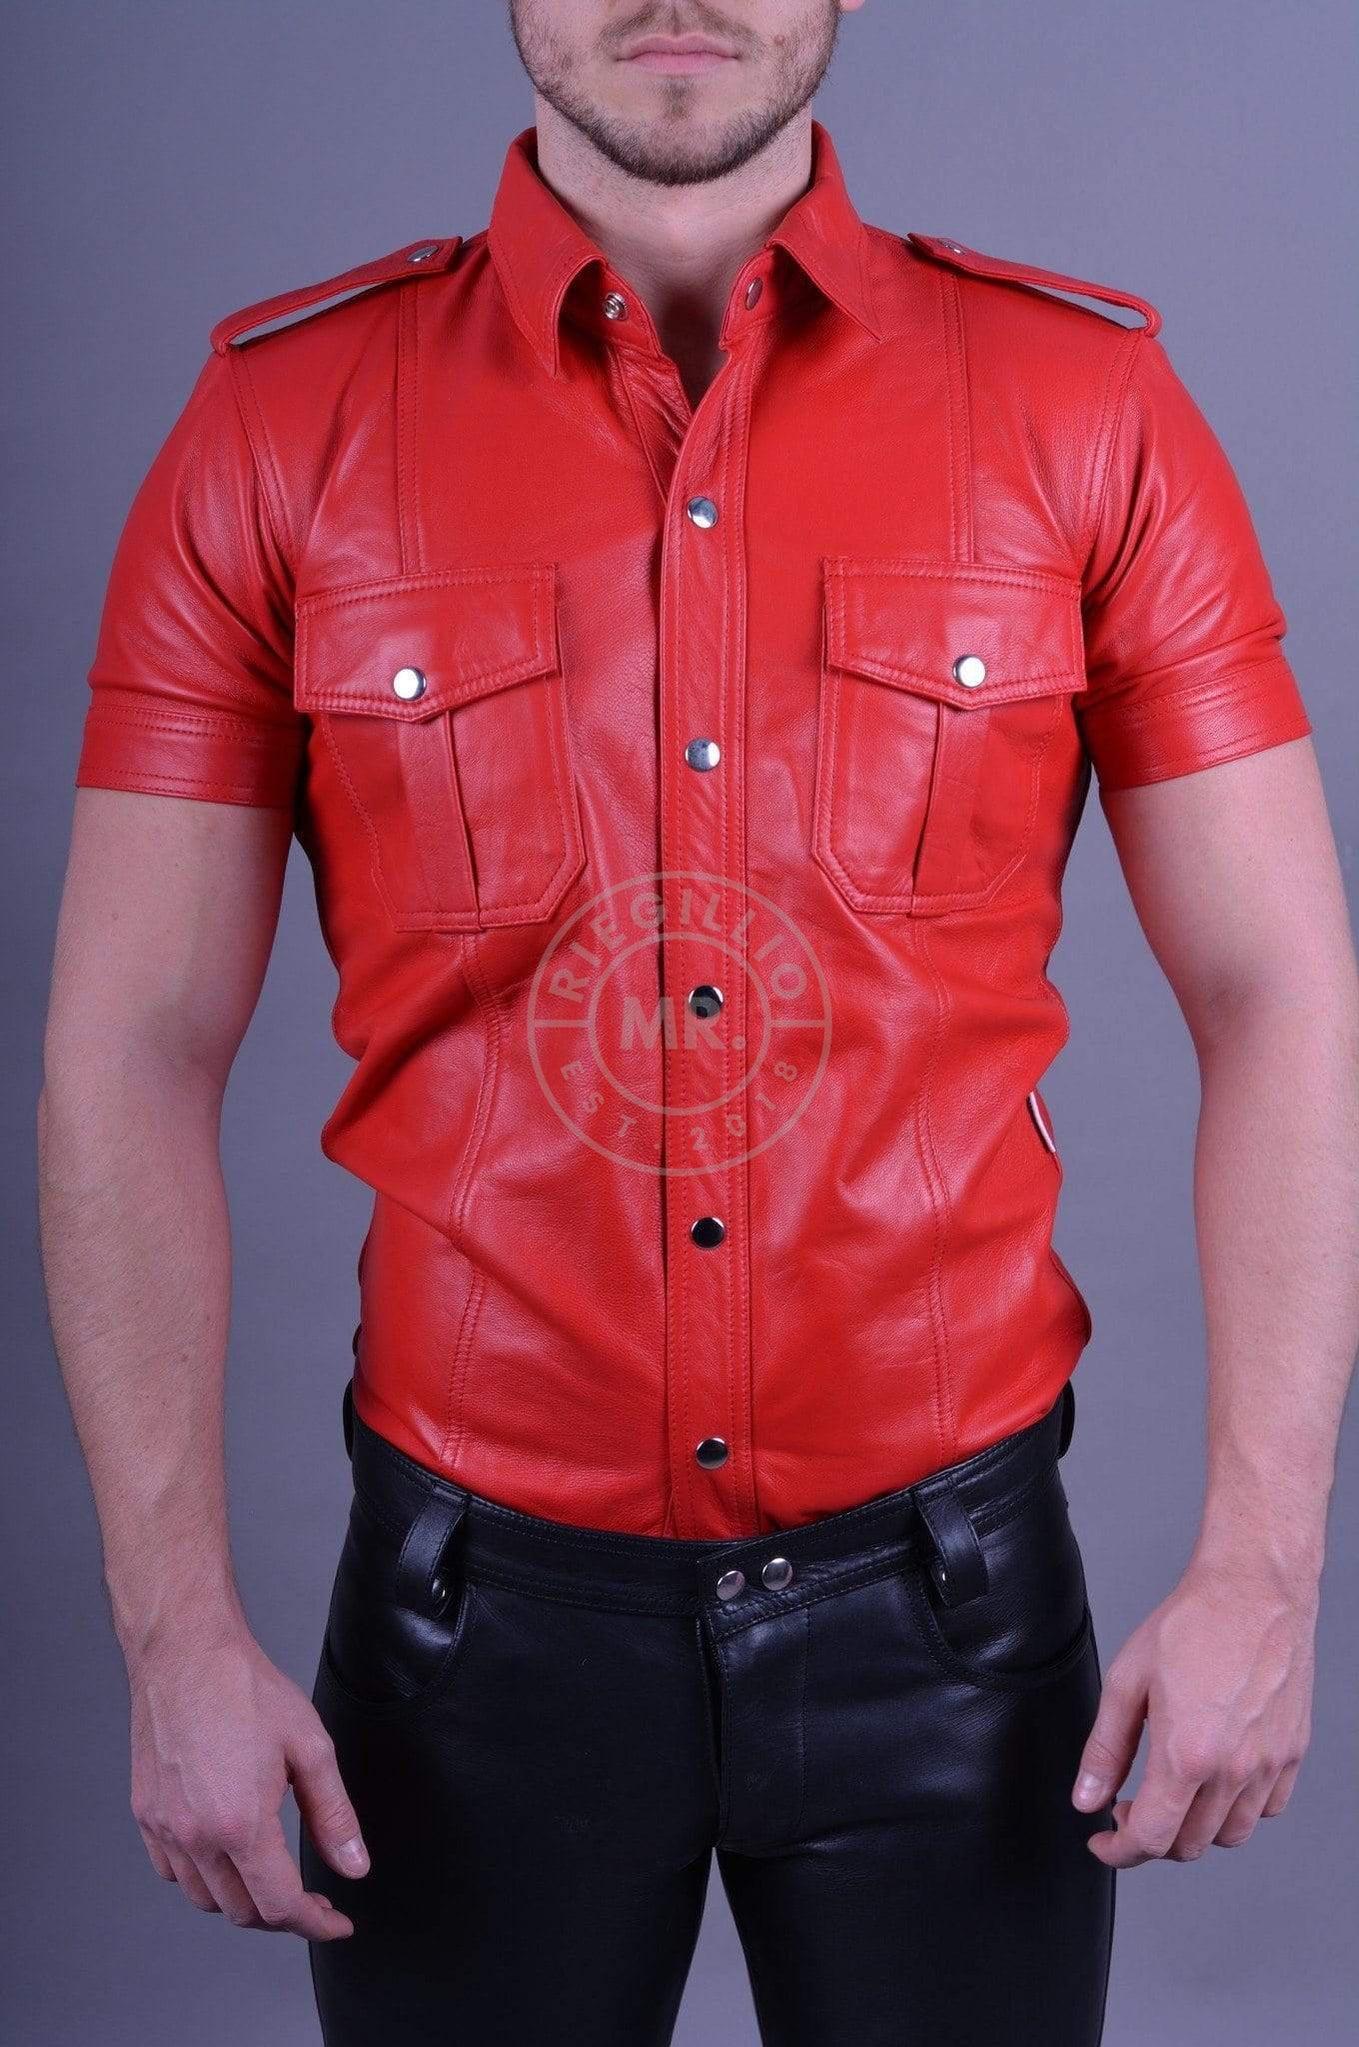 Red Leather Shirt-at MR. Riegillio